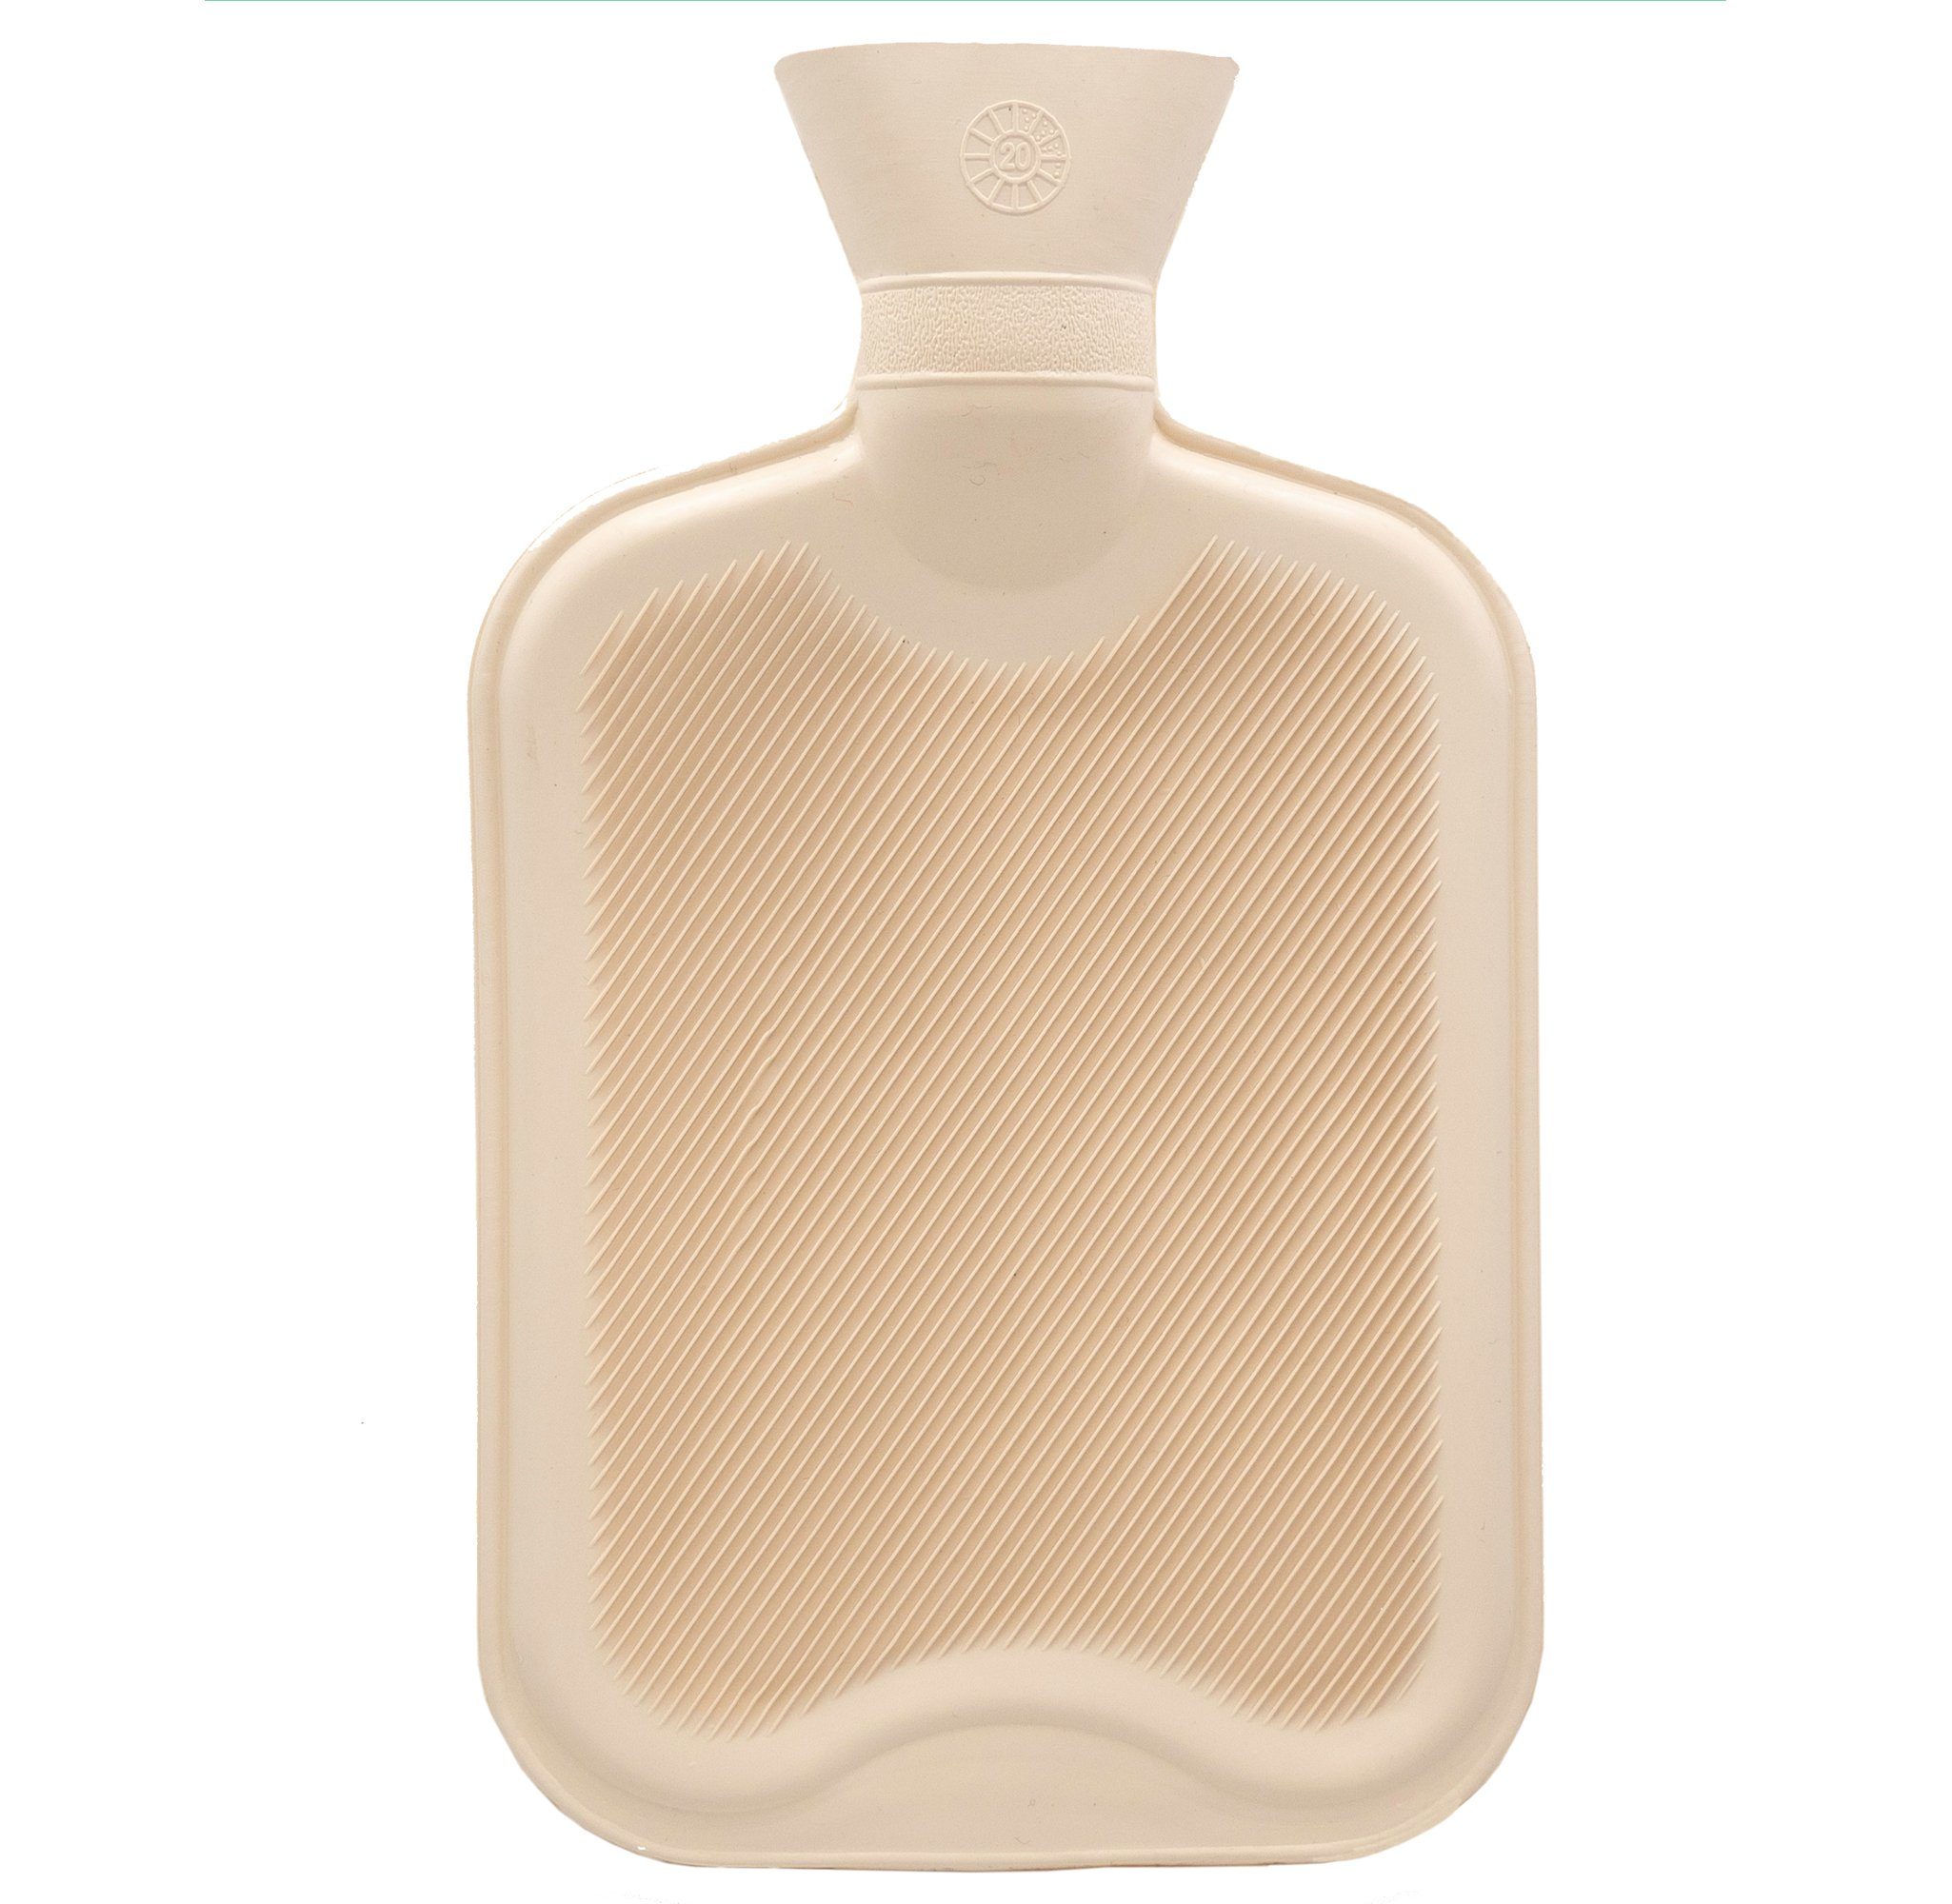 Axion Wärmflasche ohne Bezug, beige, 33 x 20 cm, ca. 2 Ltr., 100% Naturgummi